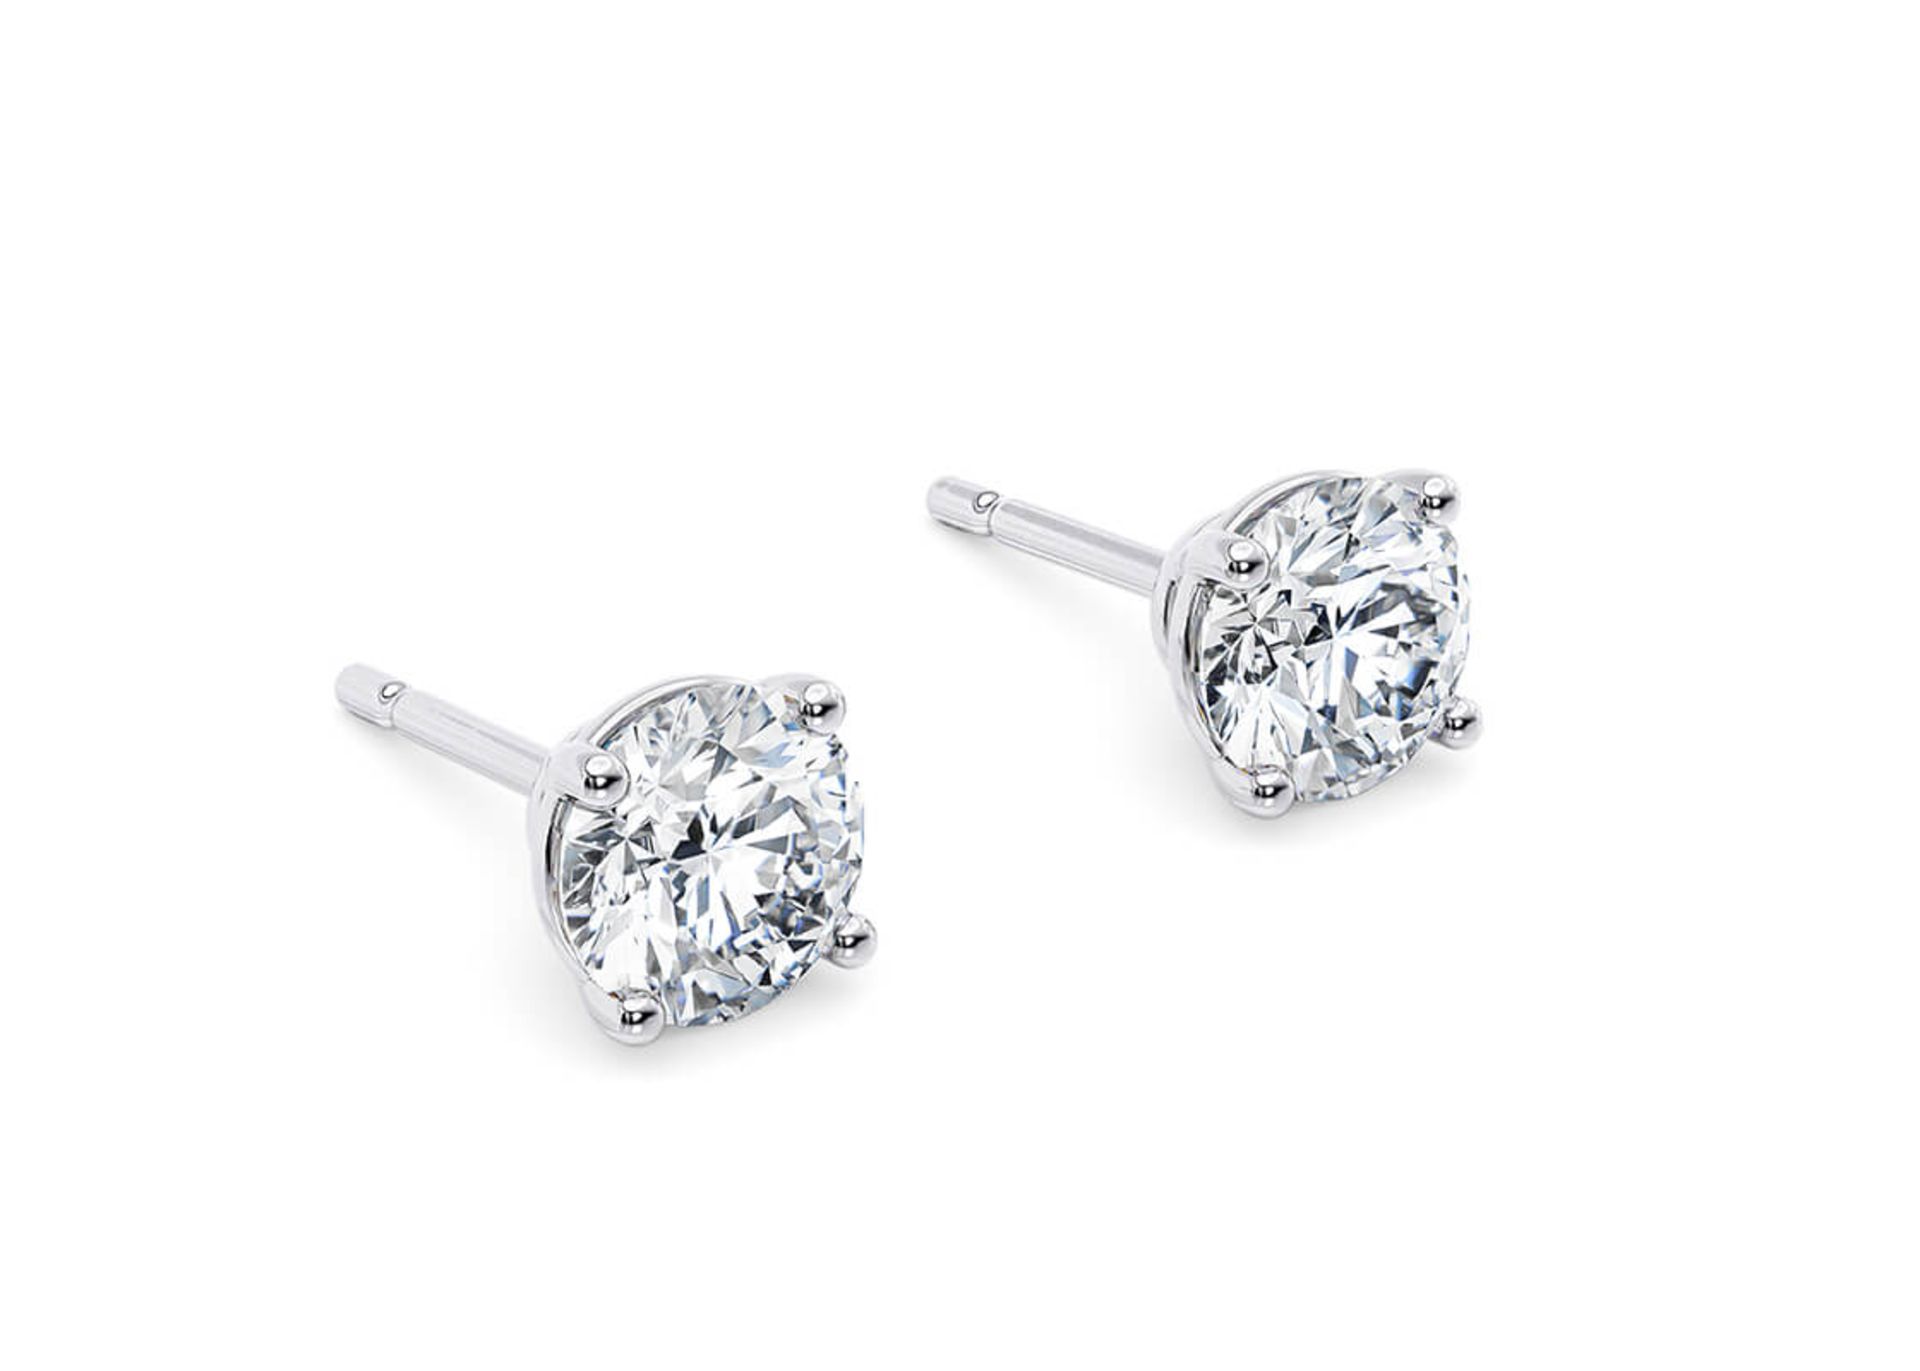 **ON SALE**Round Brilliant Cut 3.00 Carat Diamond Earrings Set in 18kt White Gold -E Colour VVS GIA - Image 2 of 3